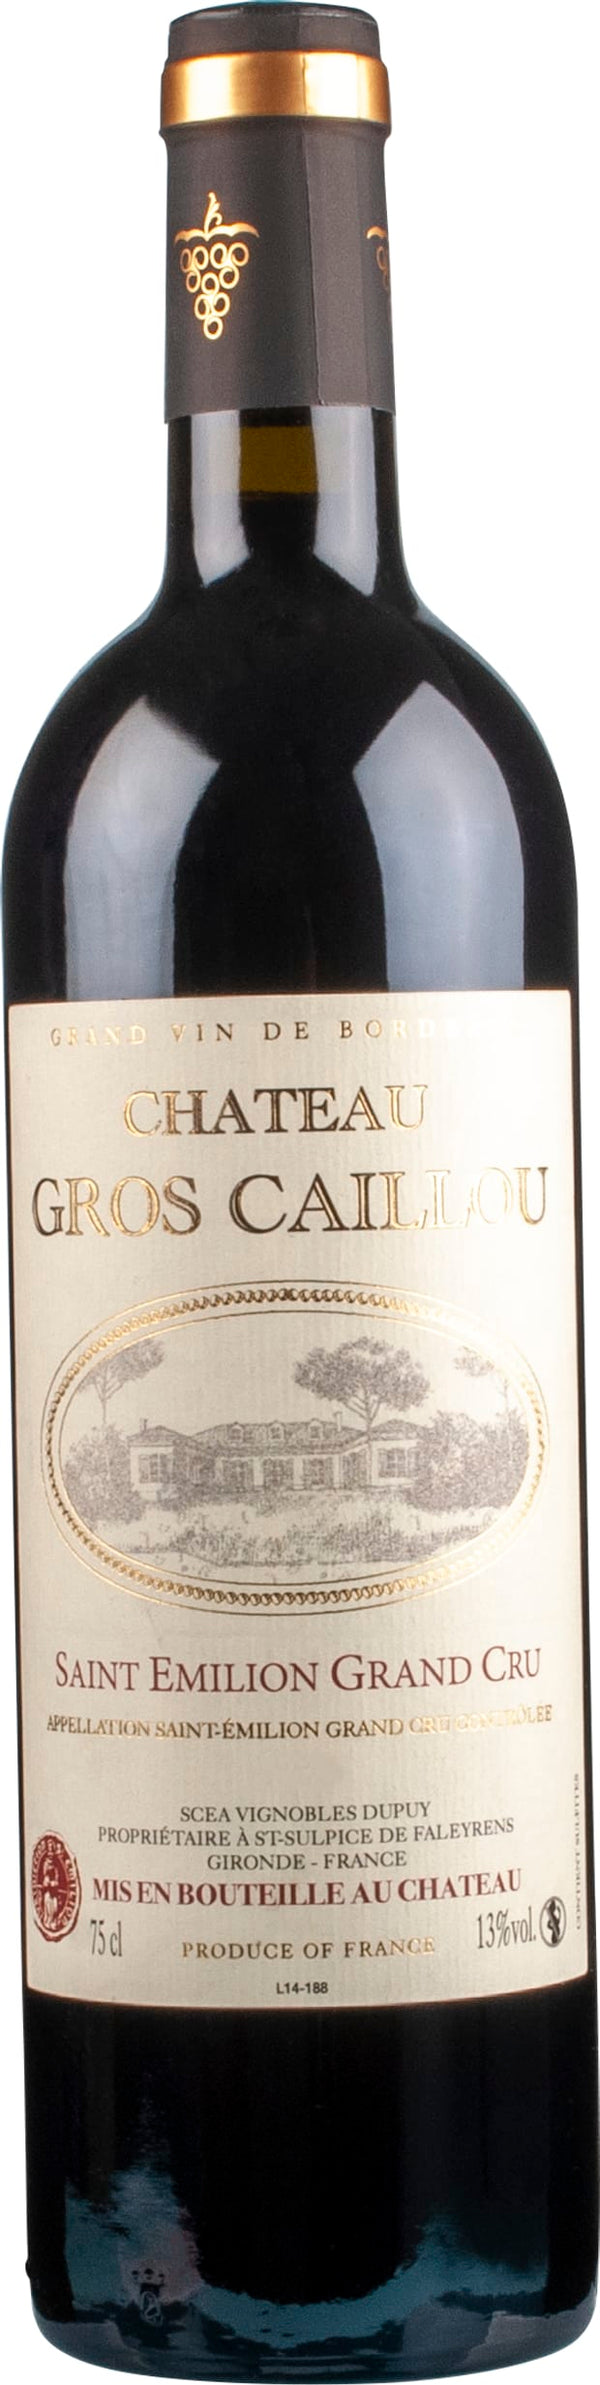 Chateau Gros Caillou Bordeaux 2015 6x75cl - Just Wines 